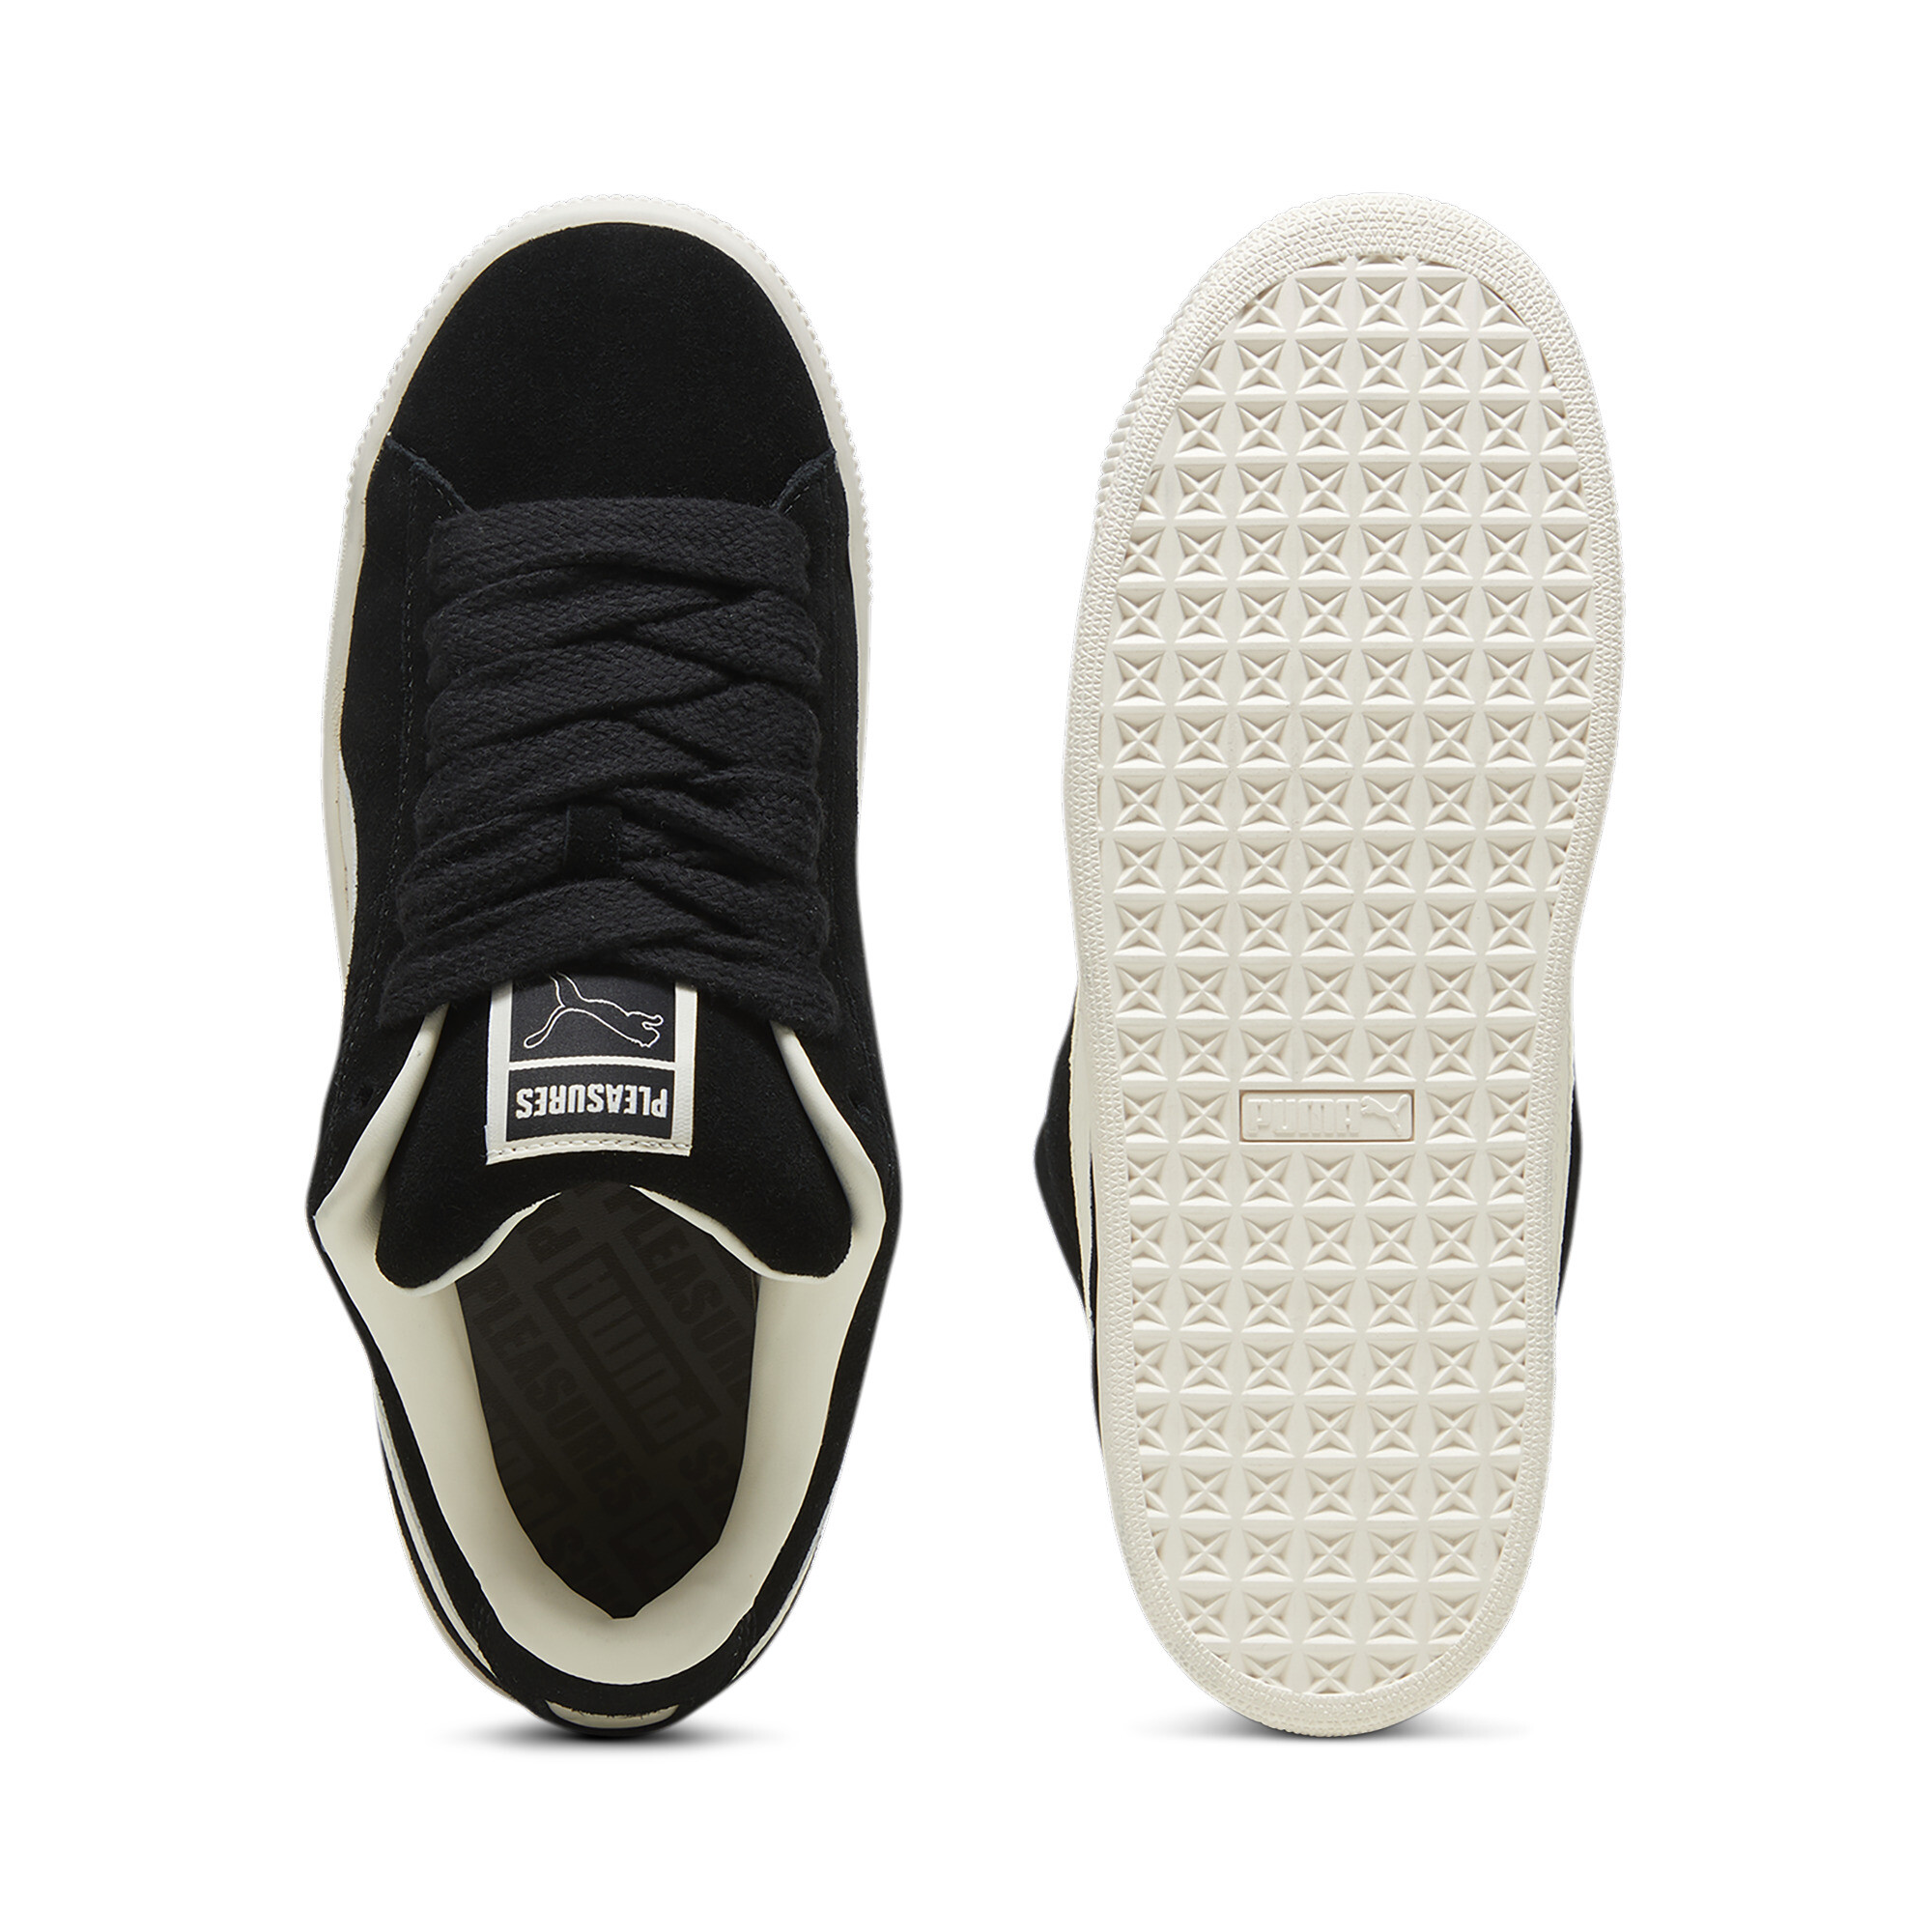 Men's PUMA X PLEASURES Suede XL Sneakers In Black, Size EU 45